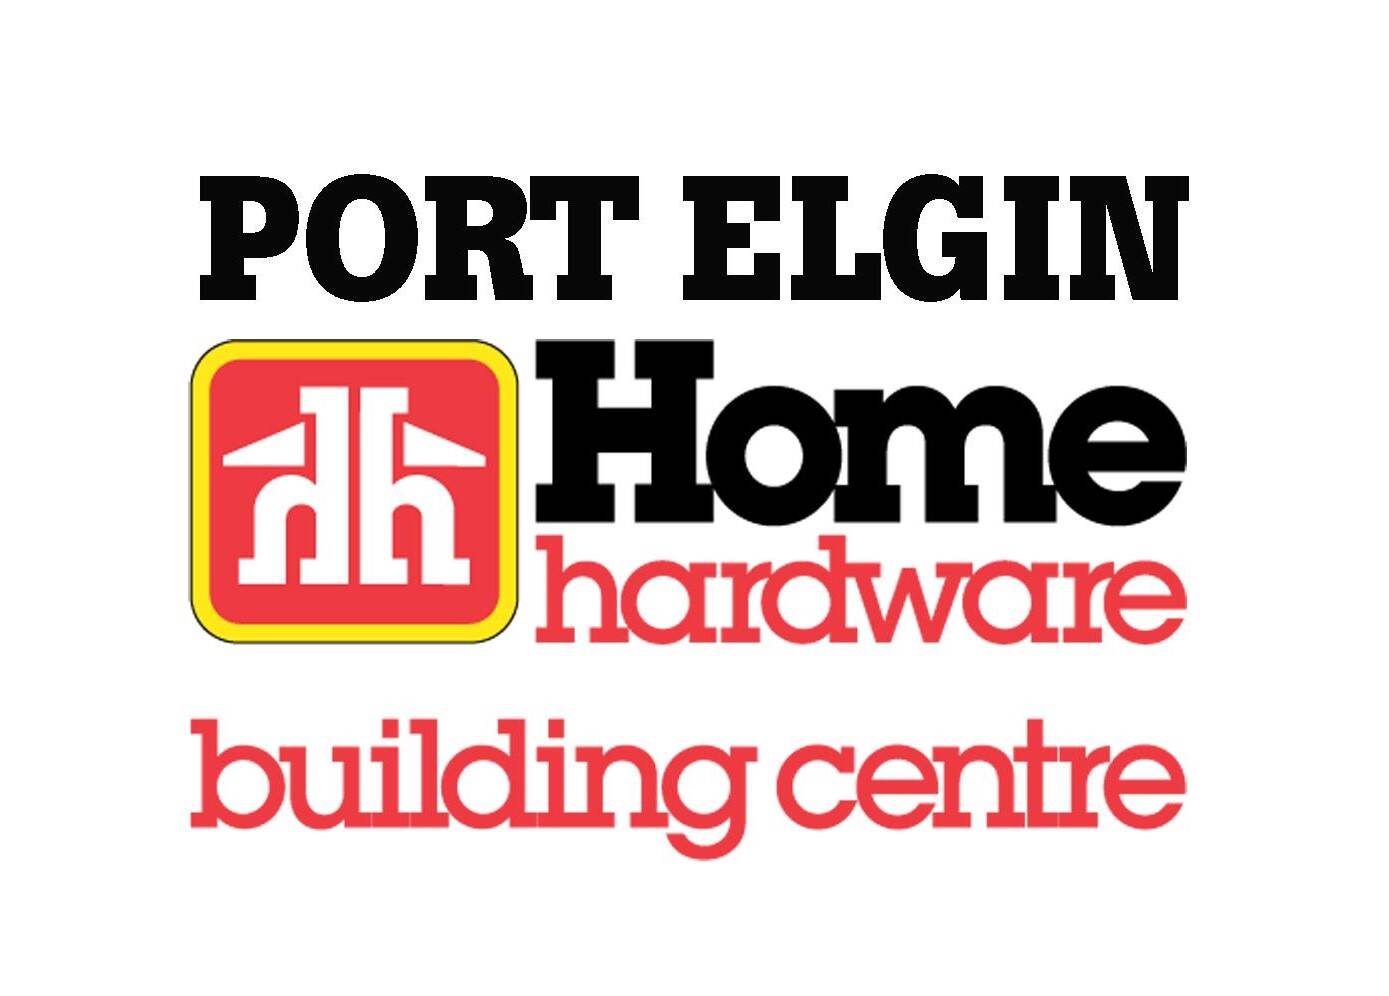 Port Elgin Home Hardware